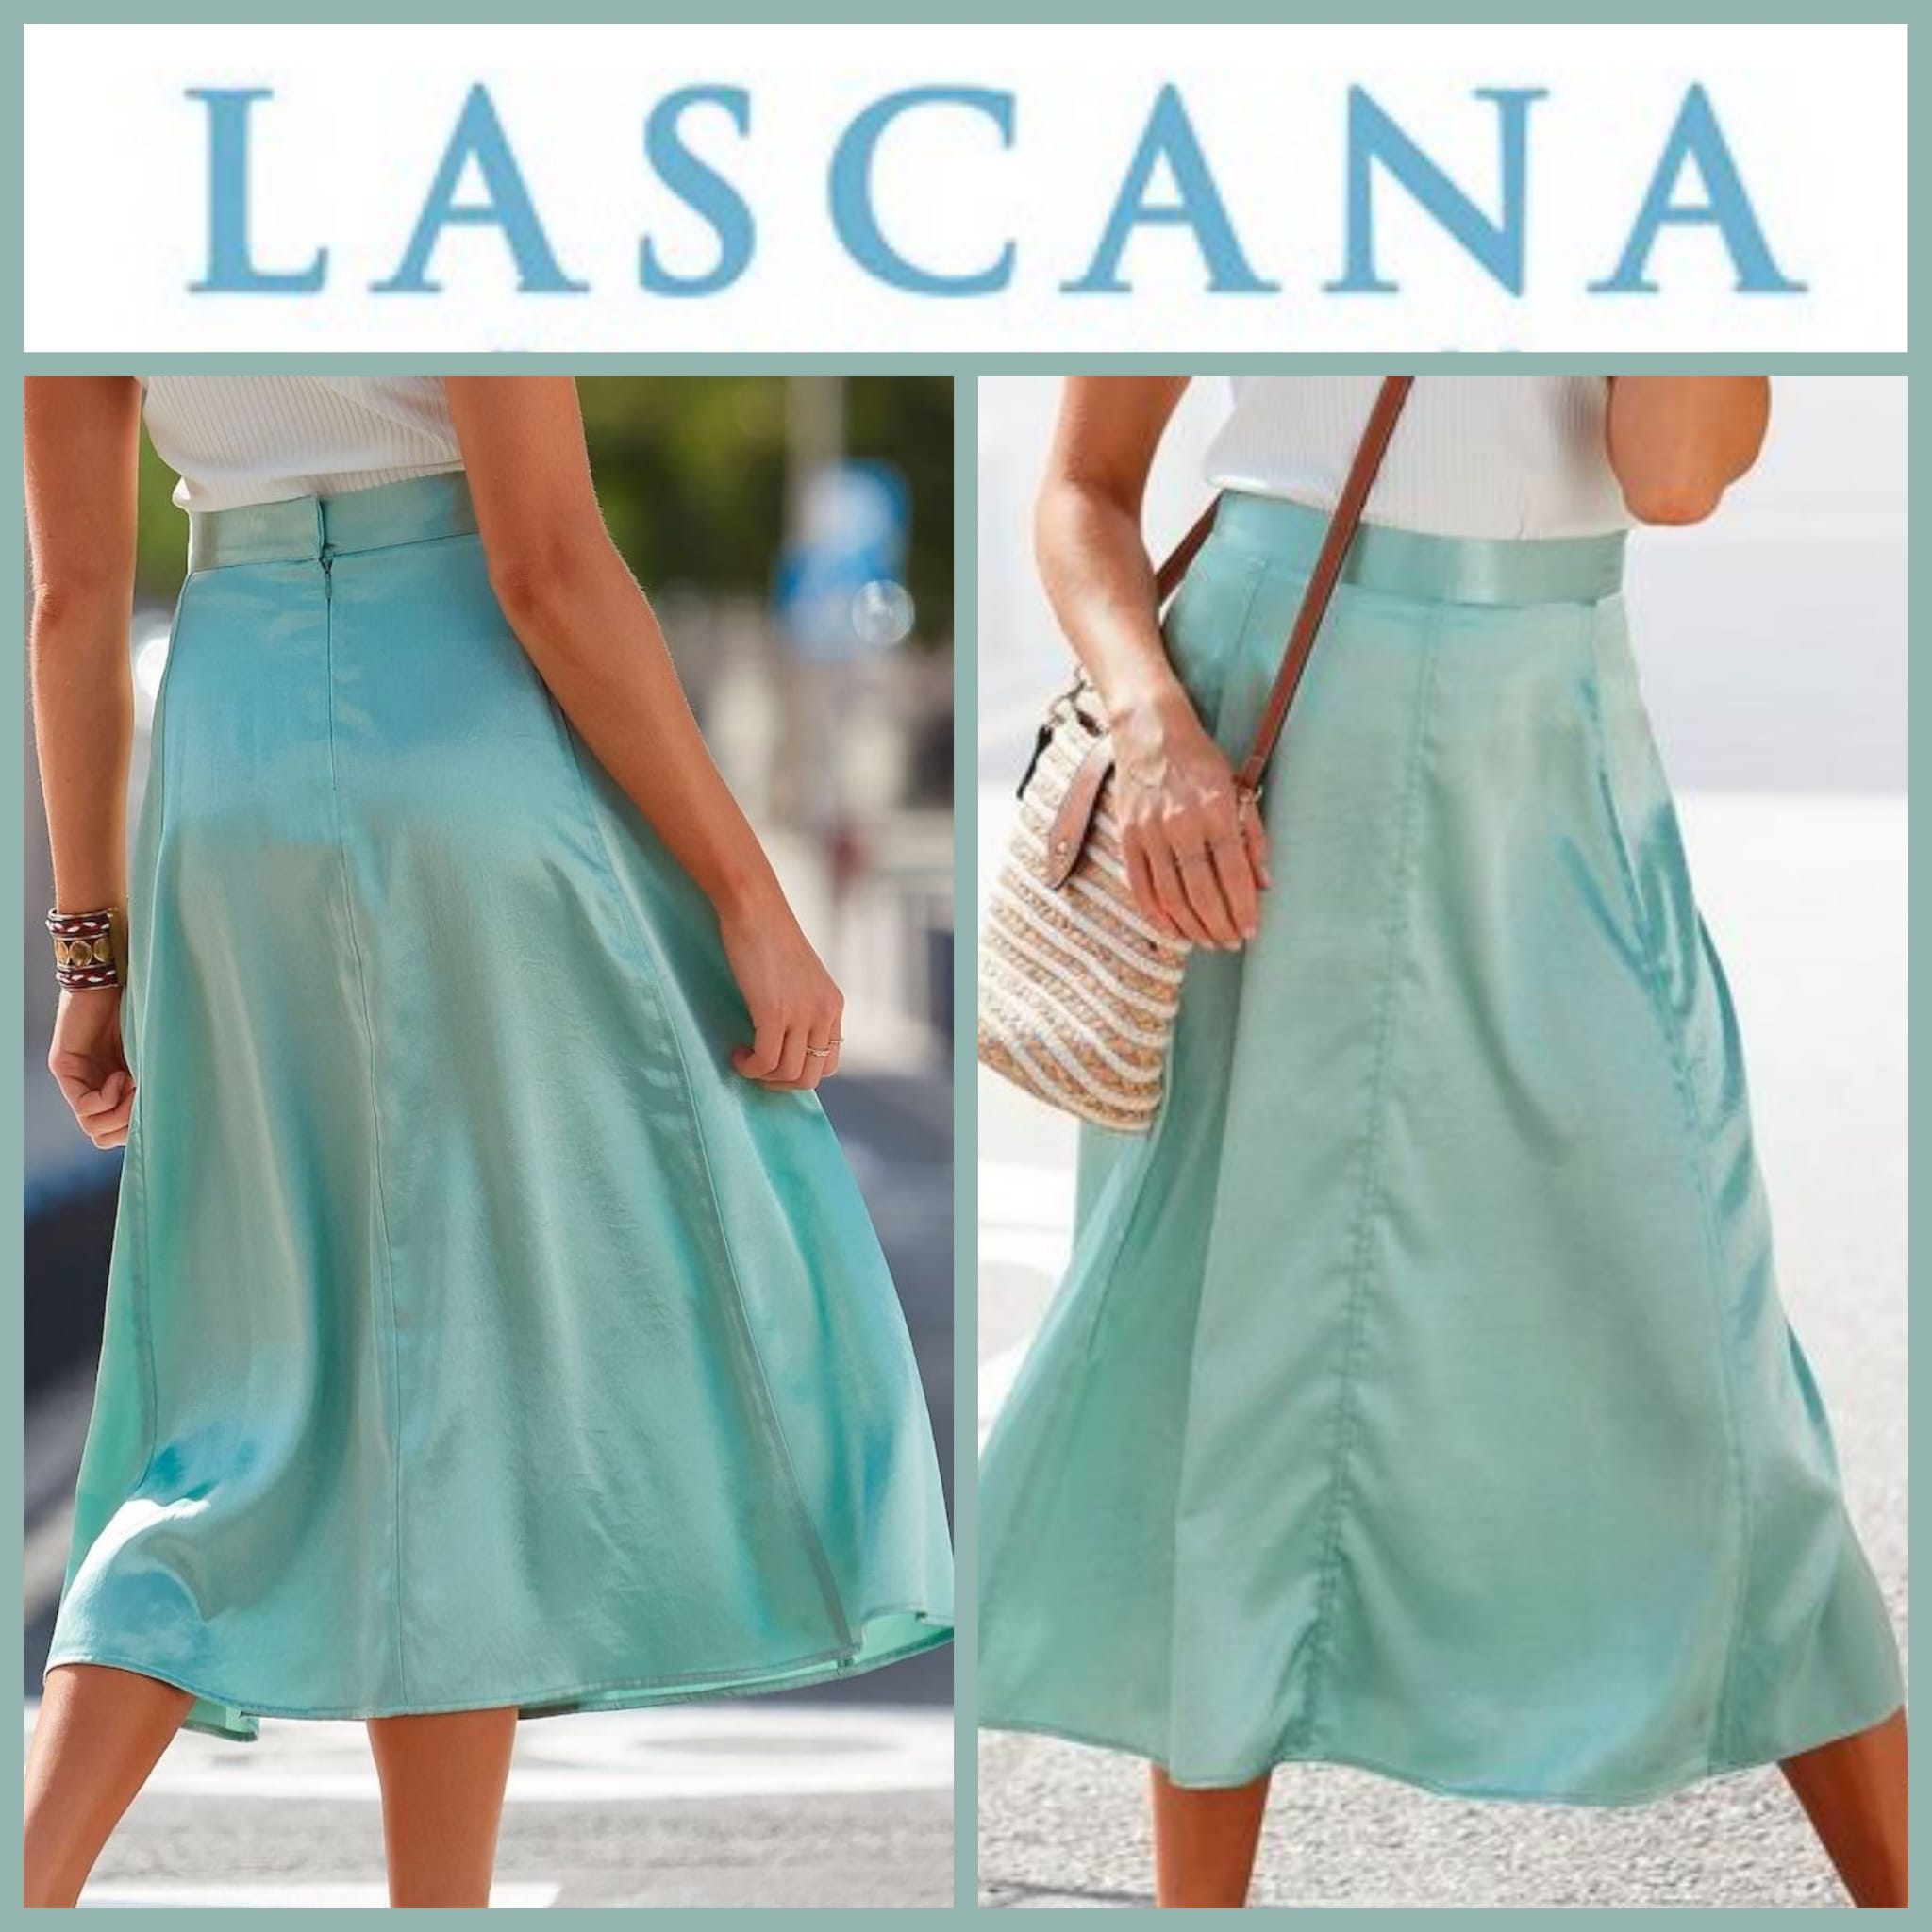 Satin skirt from Lascana